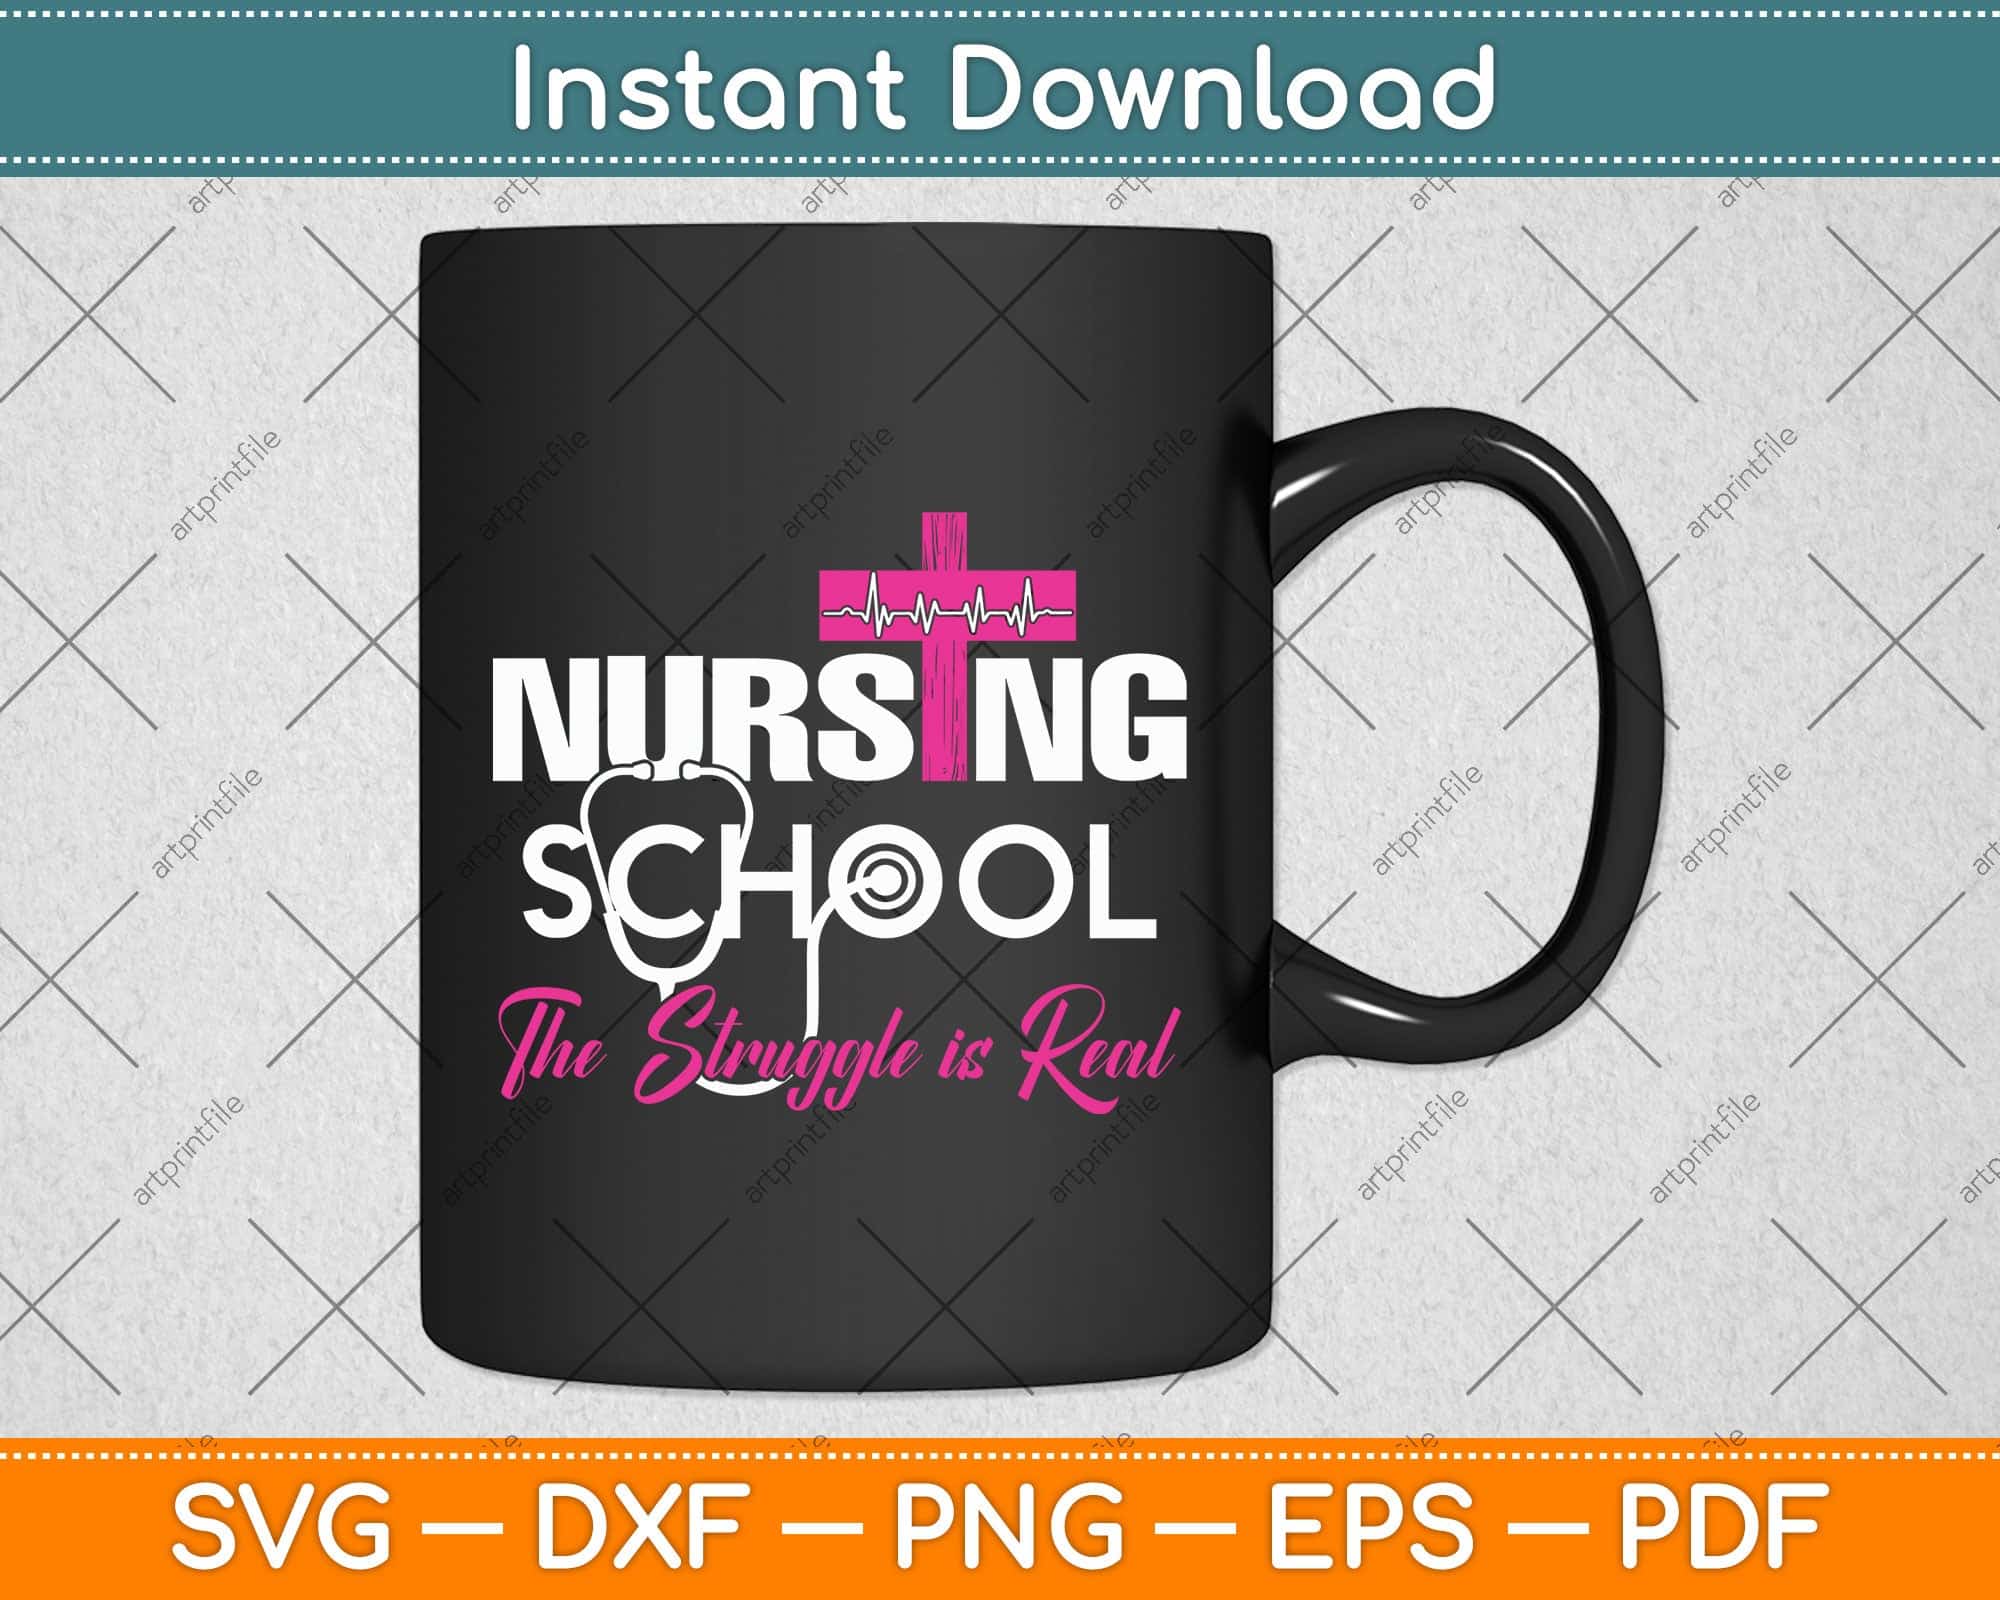 nursing school funny